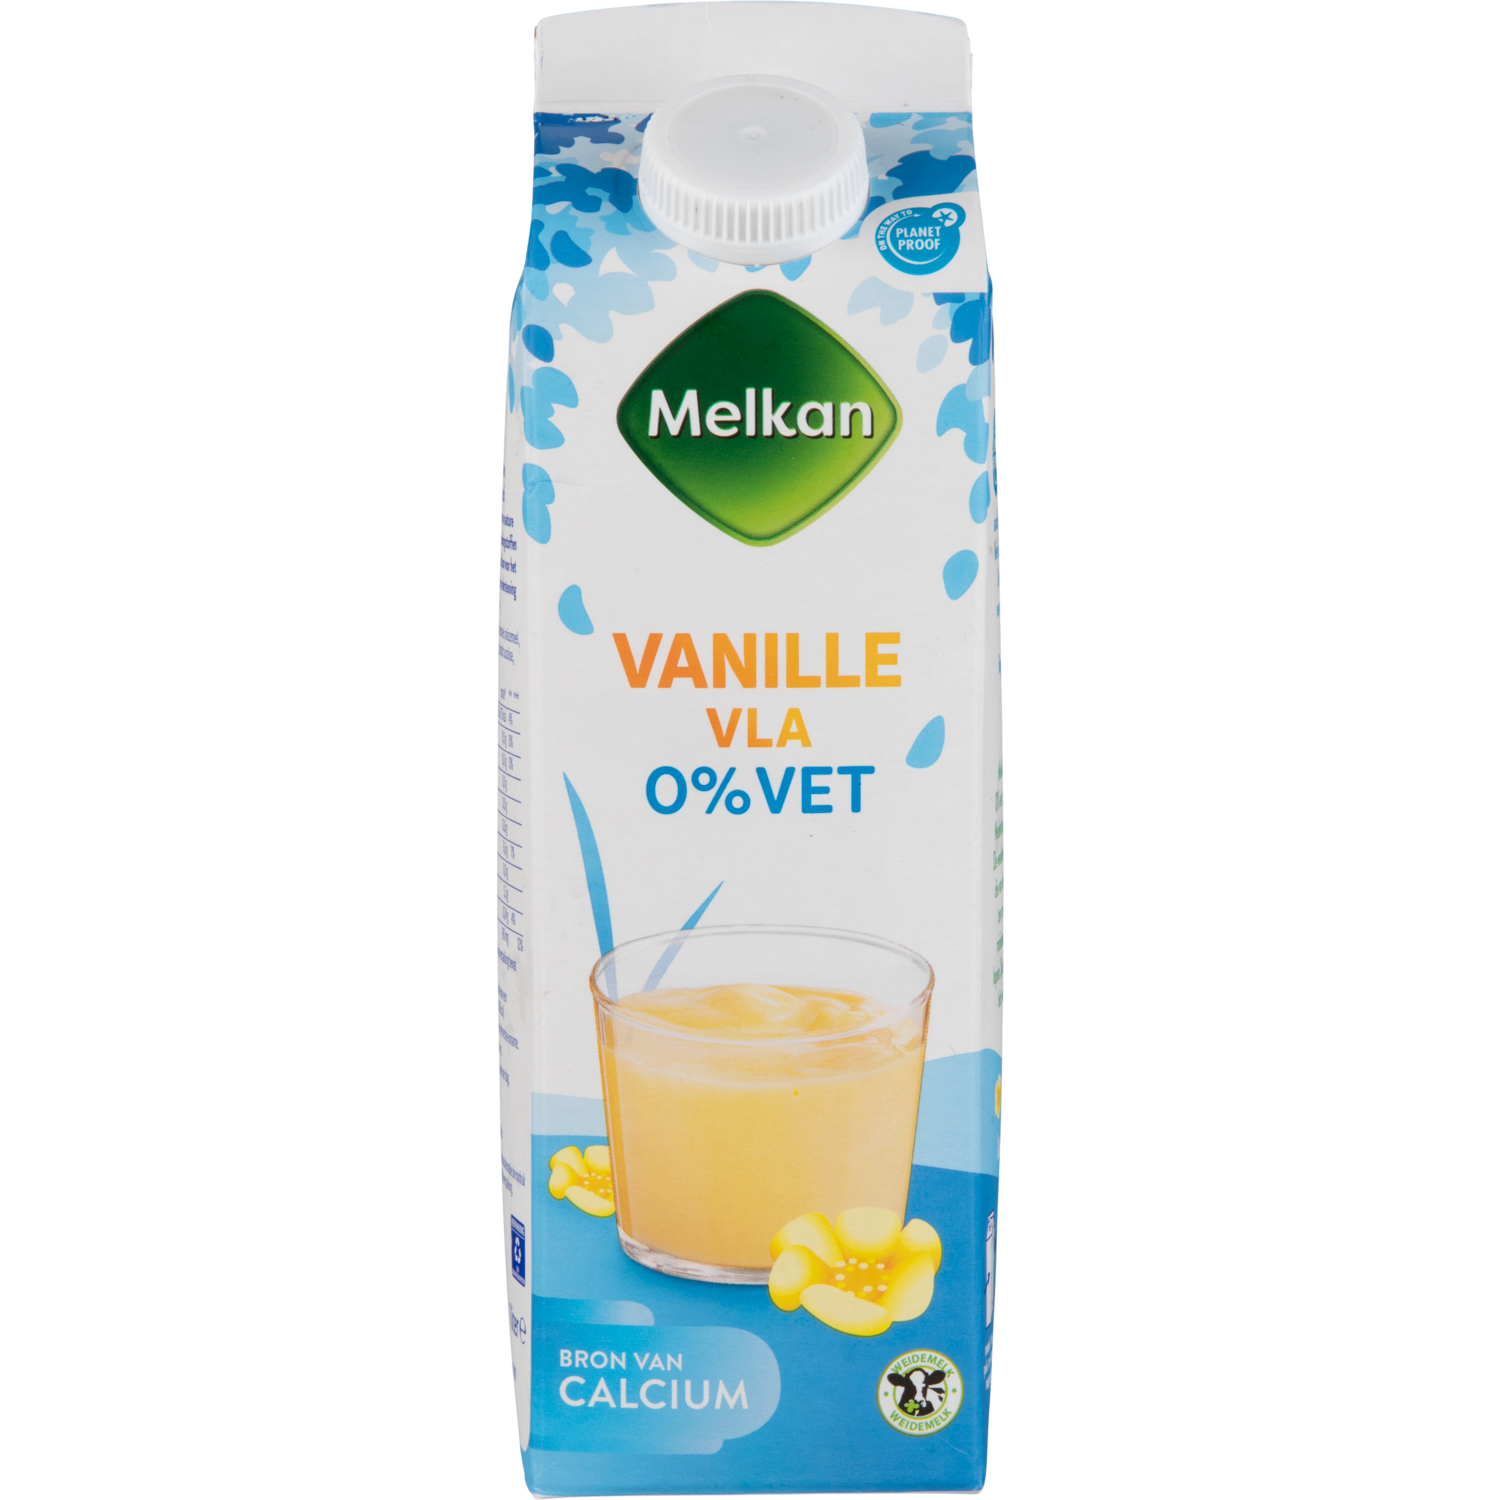 Melkan Vla vanille 0% vet DekaMarkt